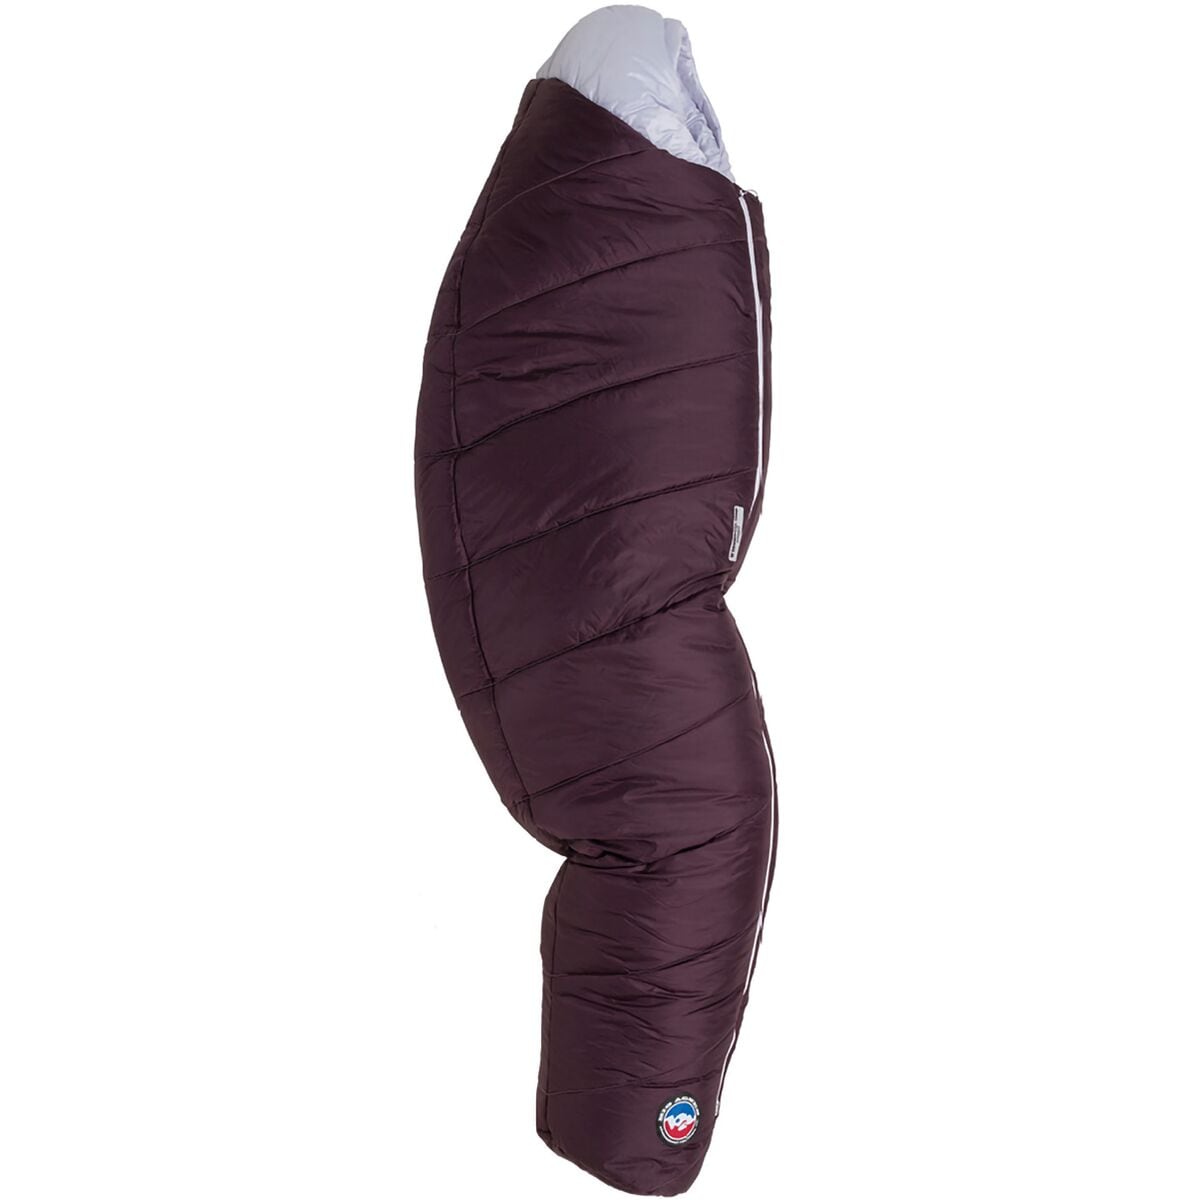 Big Agnes Sidewinder Camp Sleeping Bag: 35F Synthetic - Women's